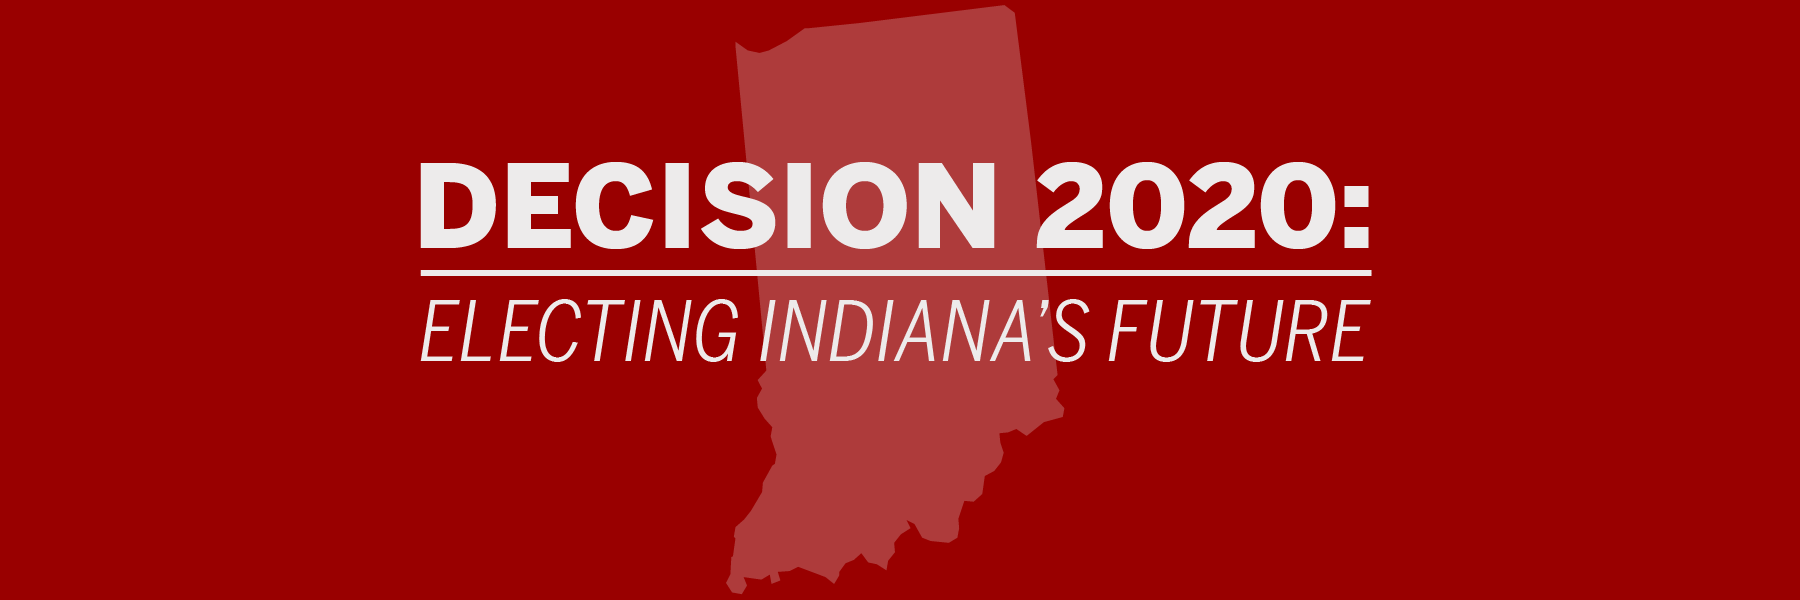 Decision 2020: Electing Indiana's Future